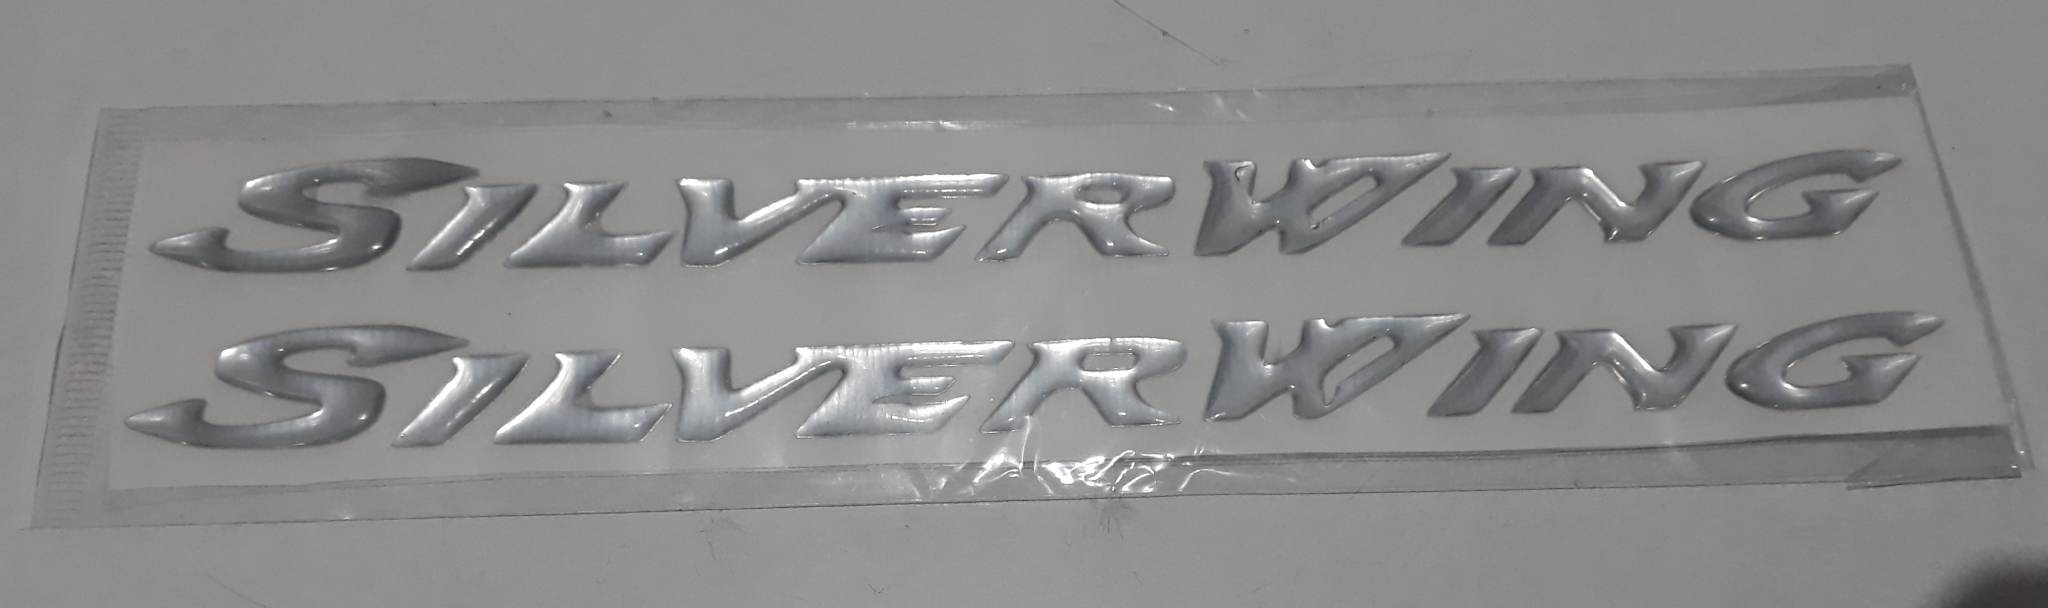 Honda Silverwing 3d kabartmalı sticker,silverving